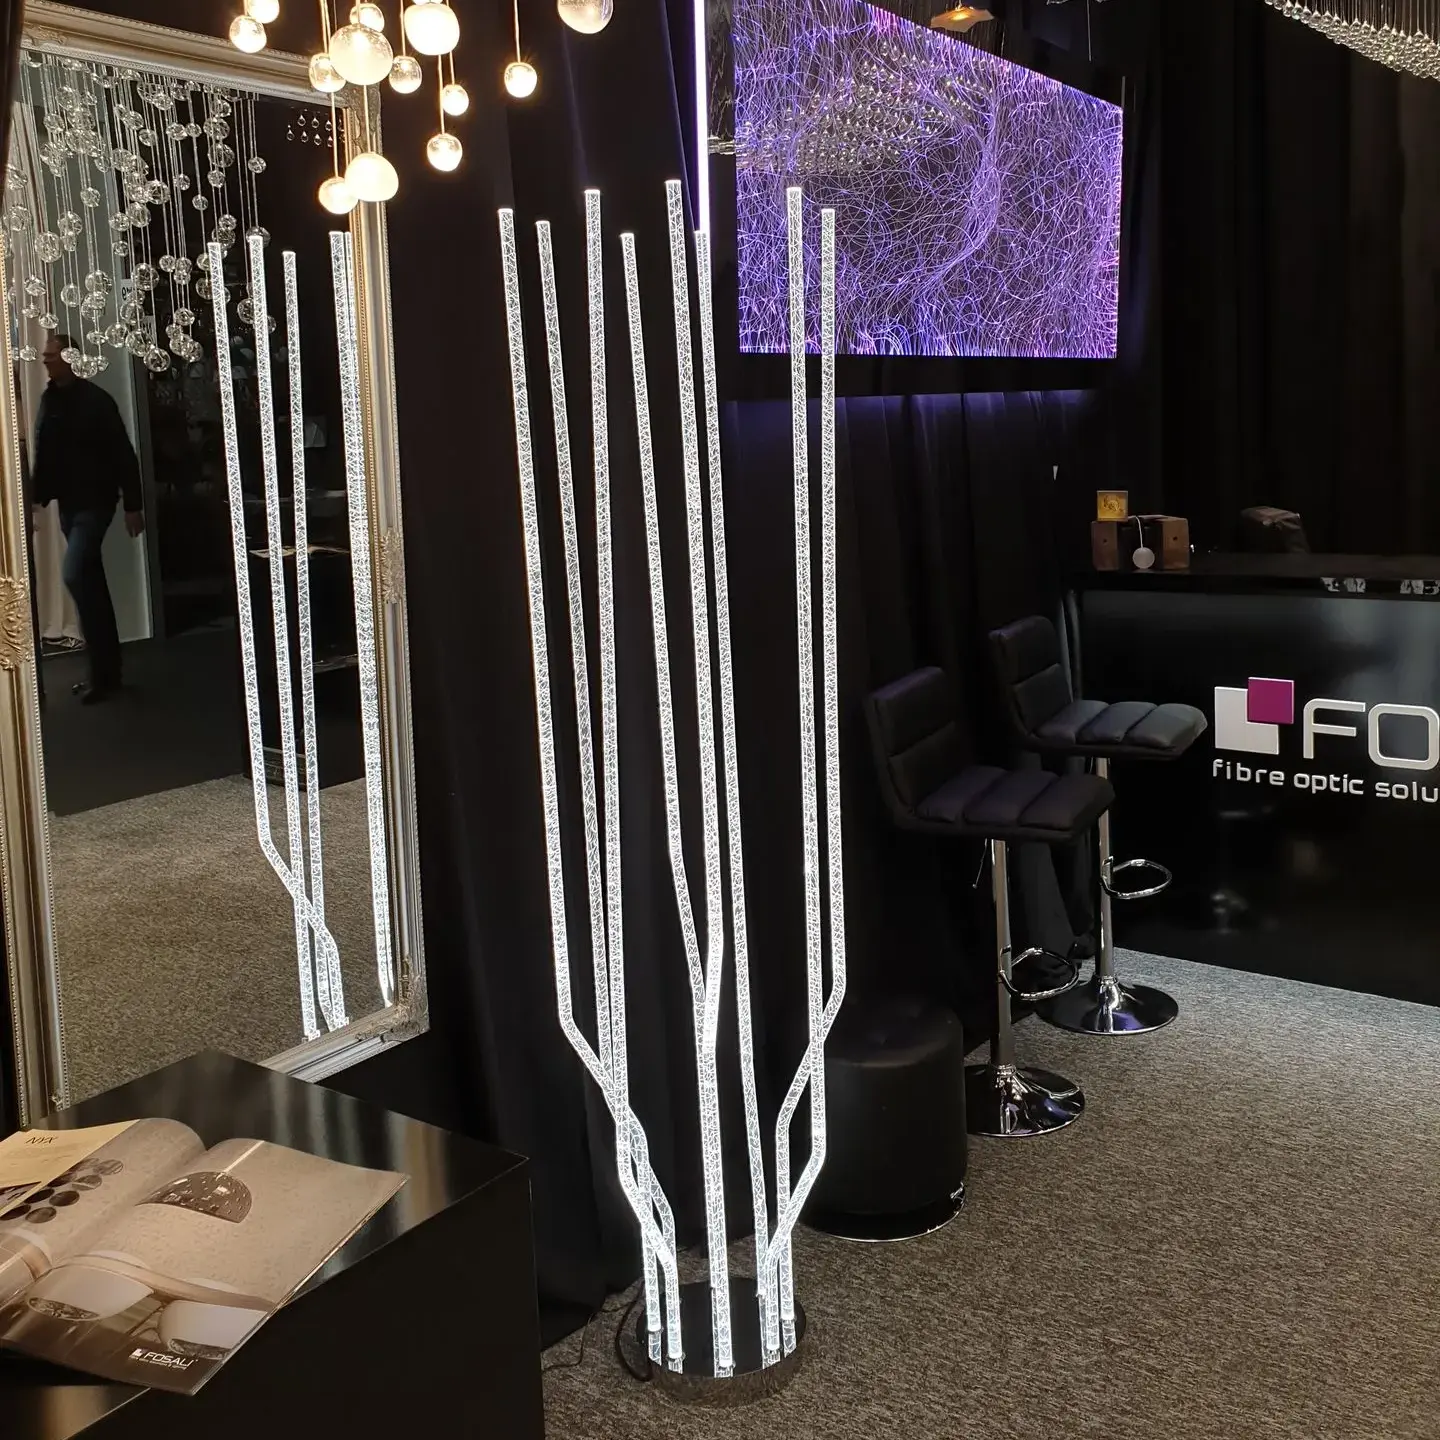 TREA floor lamp made of fibre optic light rods 2m tall lamp exhibition